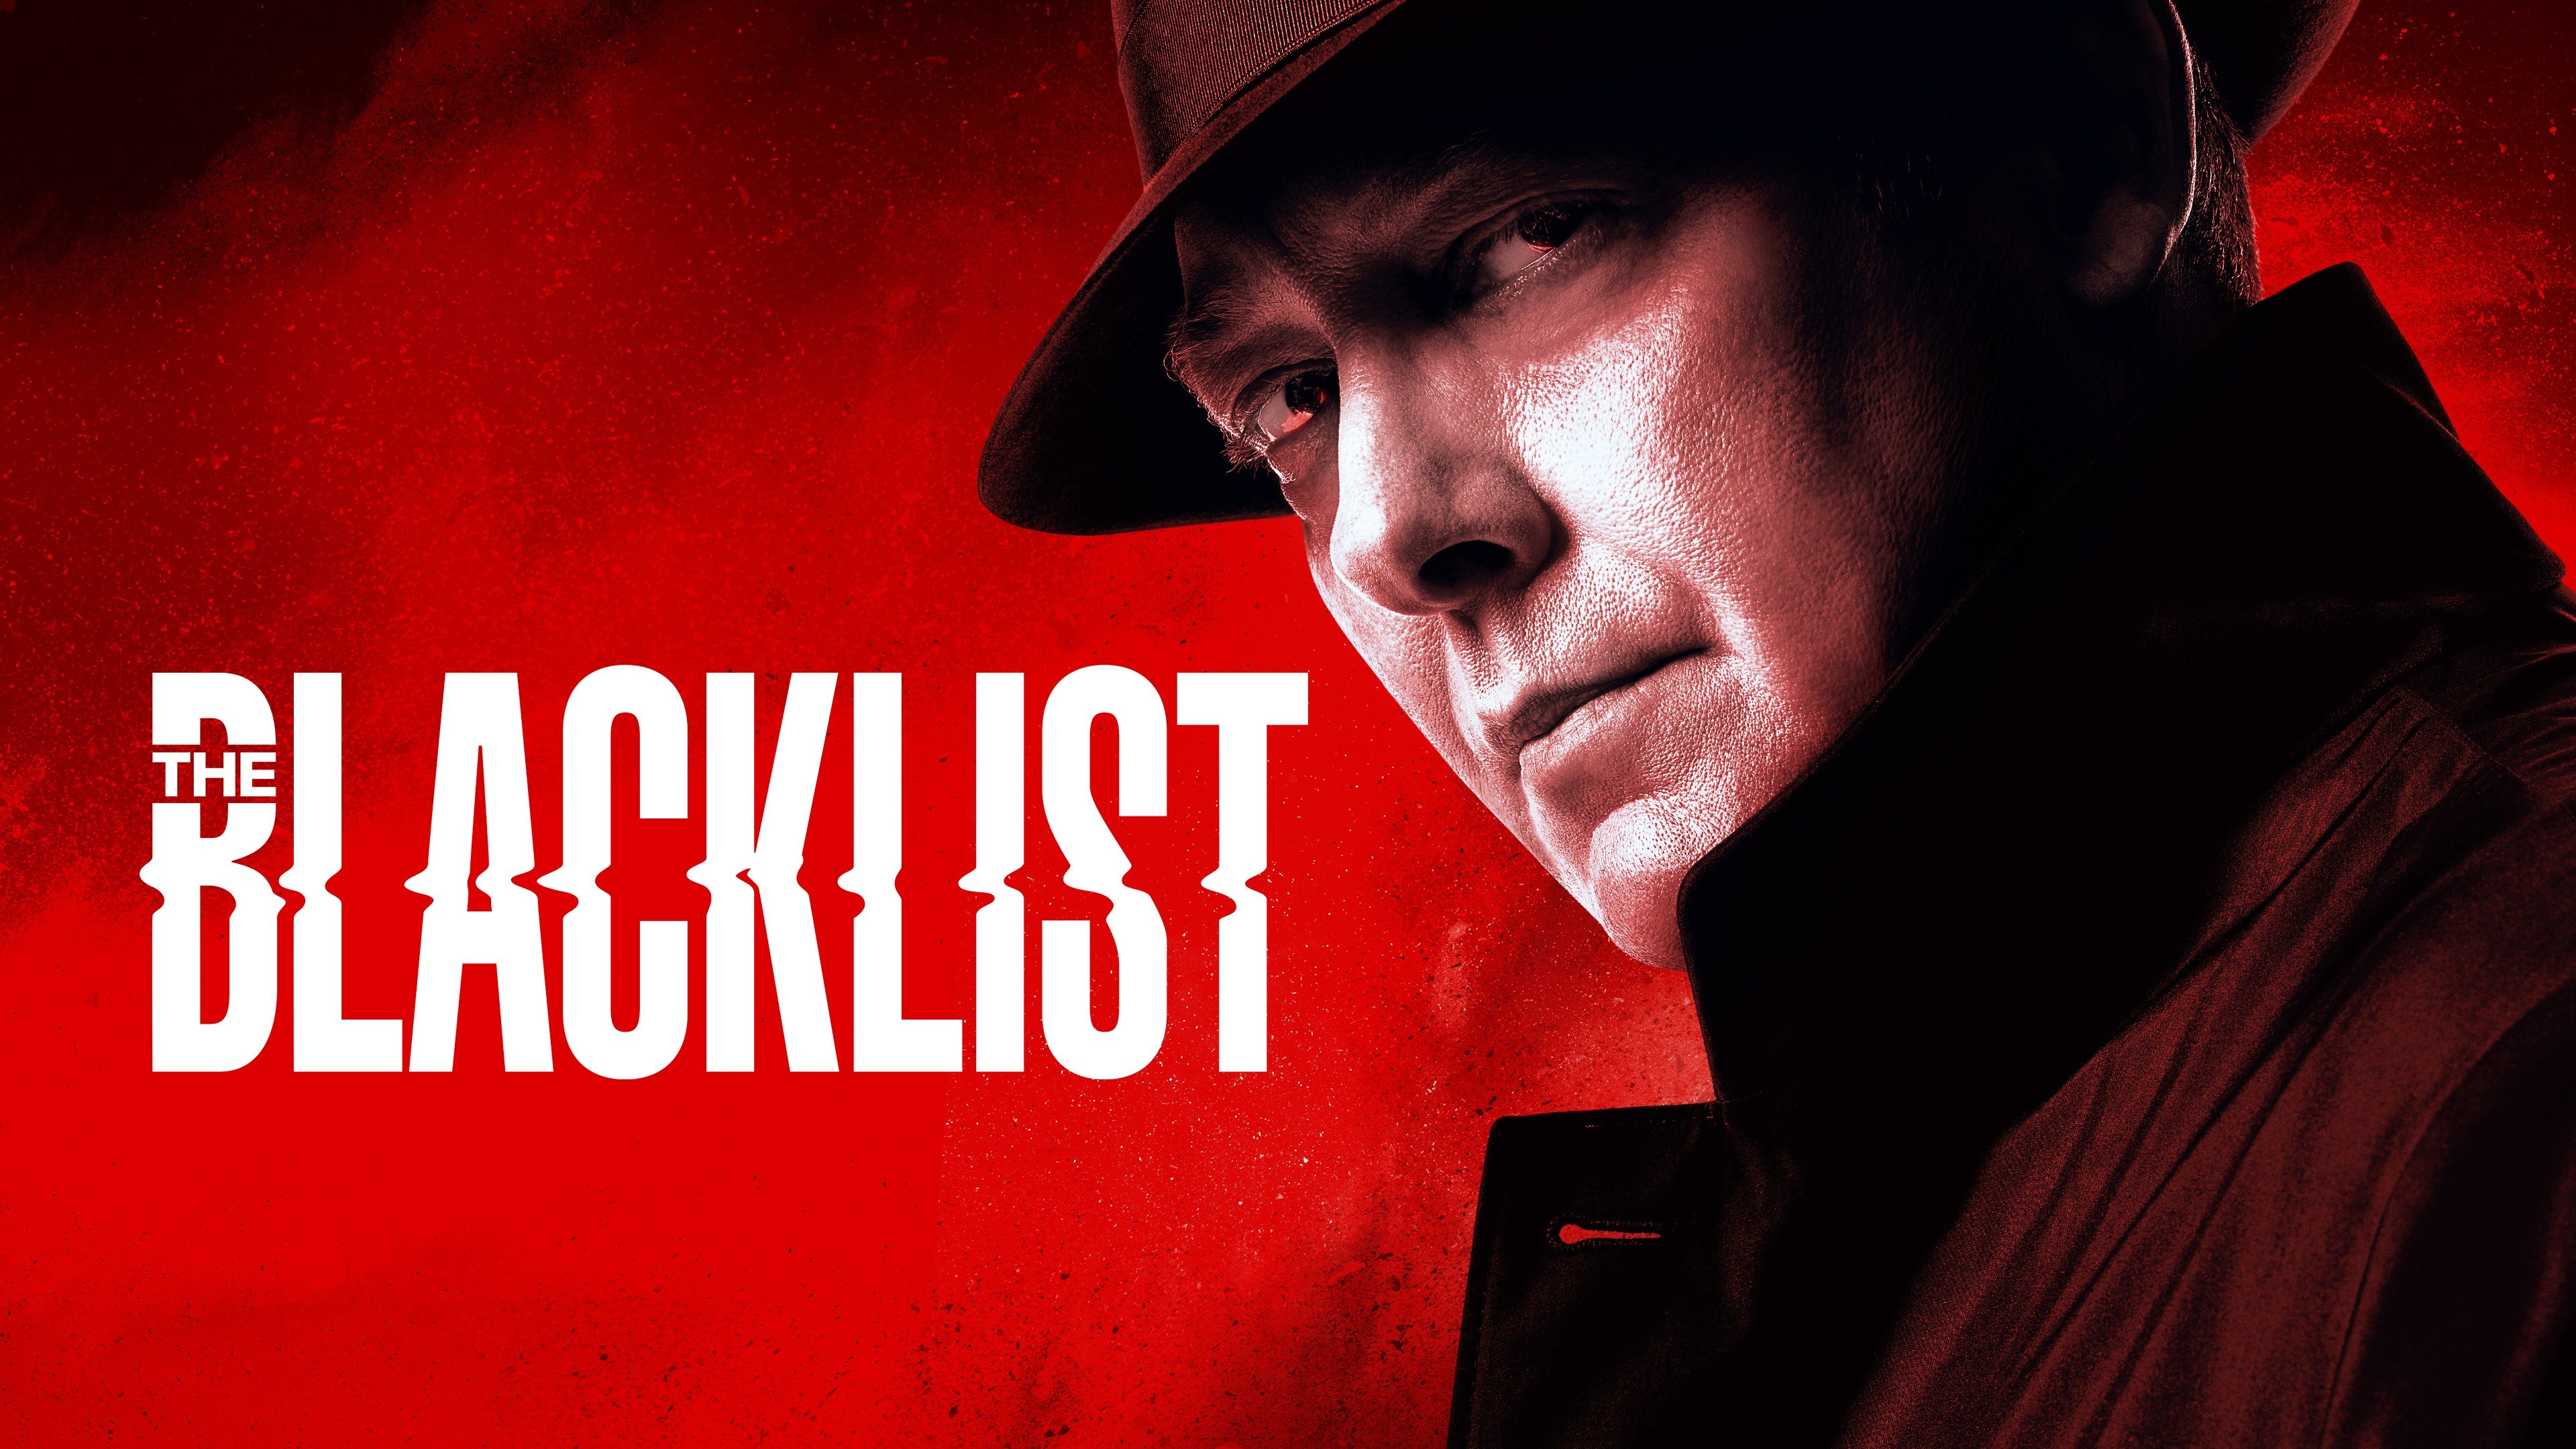 the blacklist season 5 online free